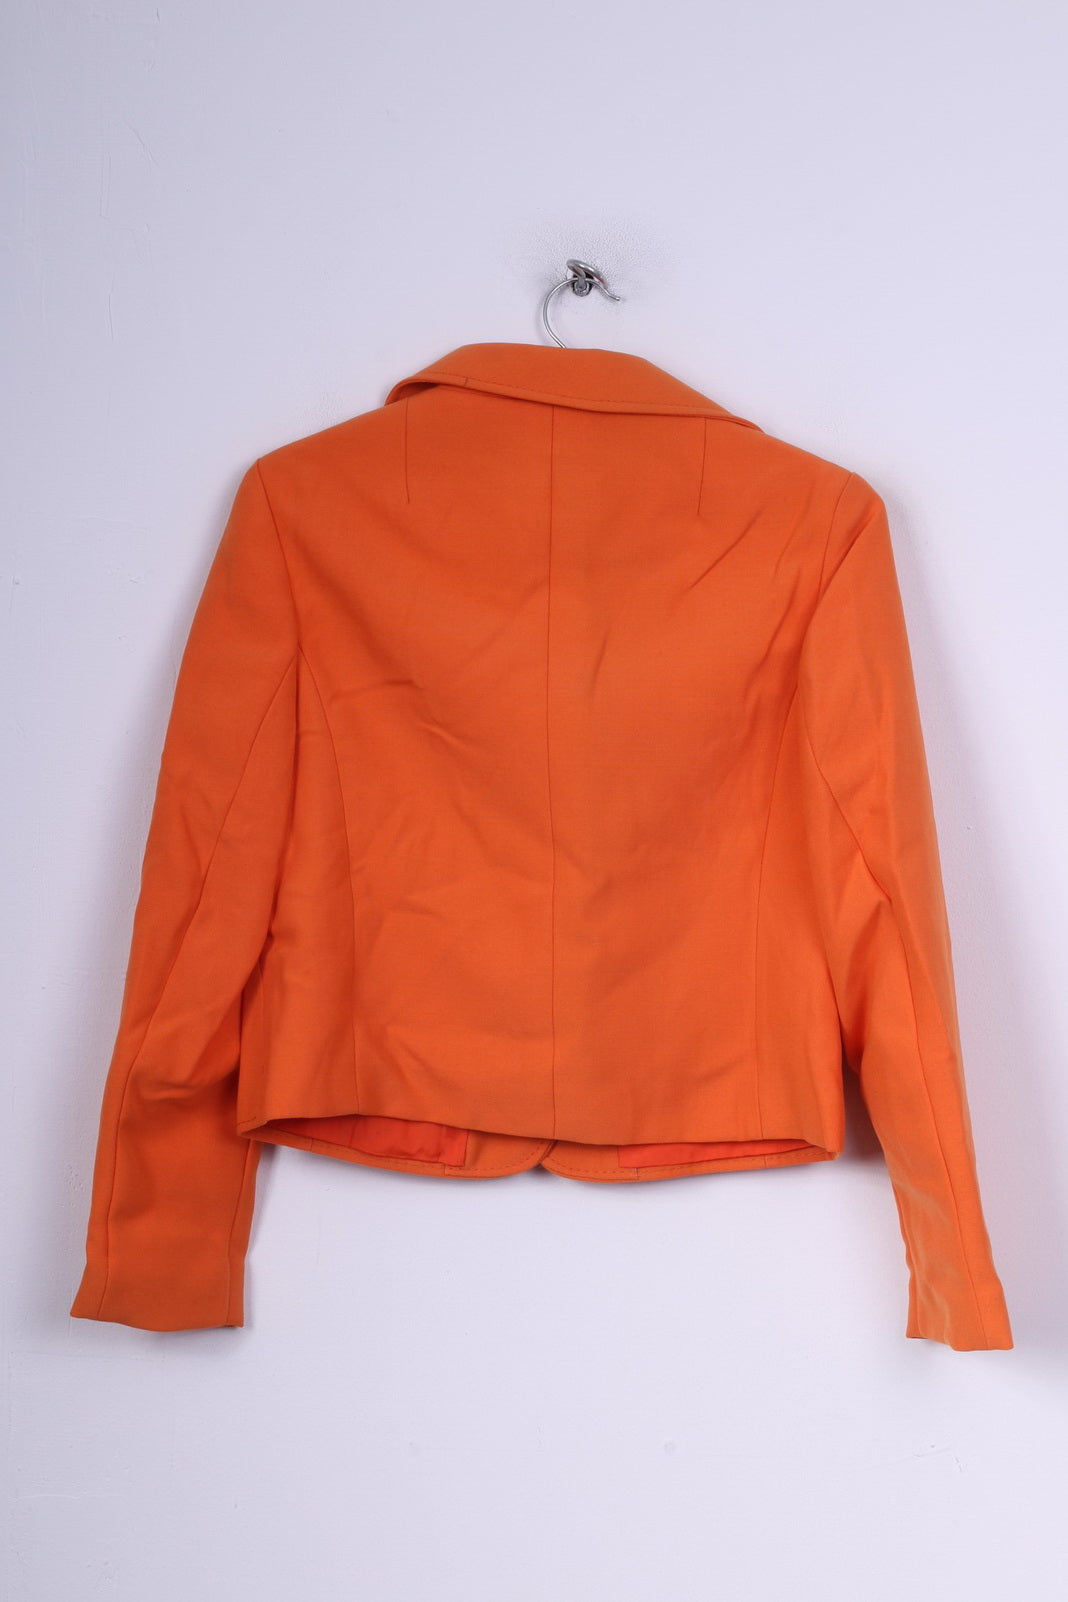 Giacca trevira da donna 40 M blazer monopetto arancione vintage 